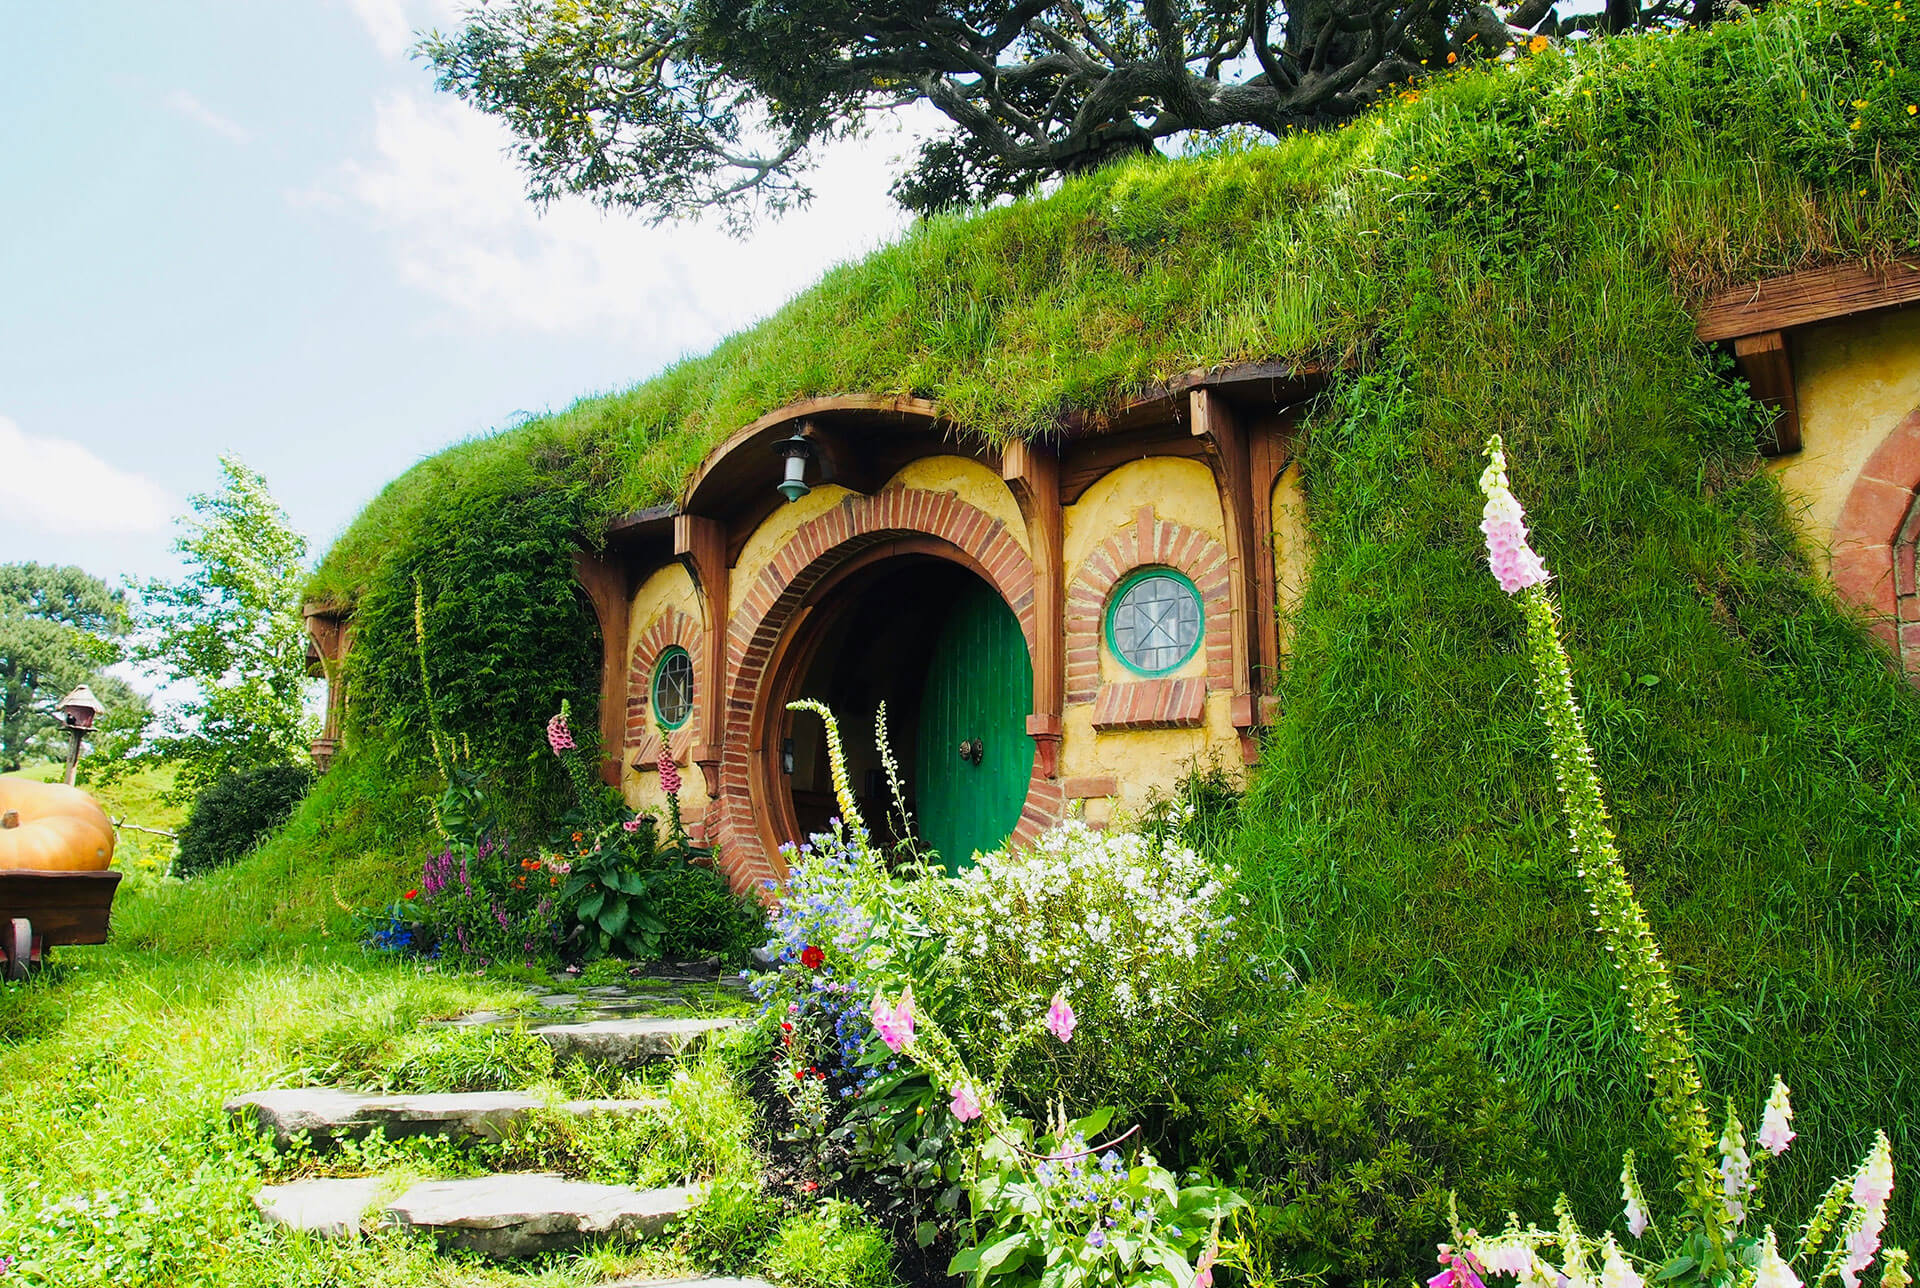 Hobbiton Movie Set, New Zealand | Photo by Adrien Aletti on Unsplash